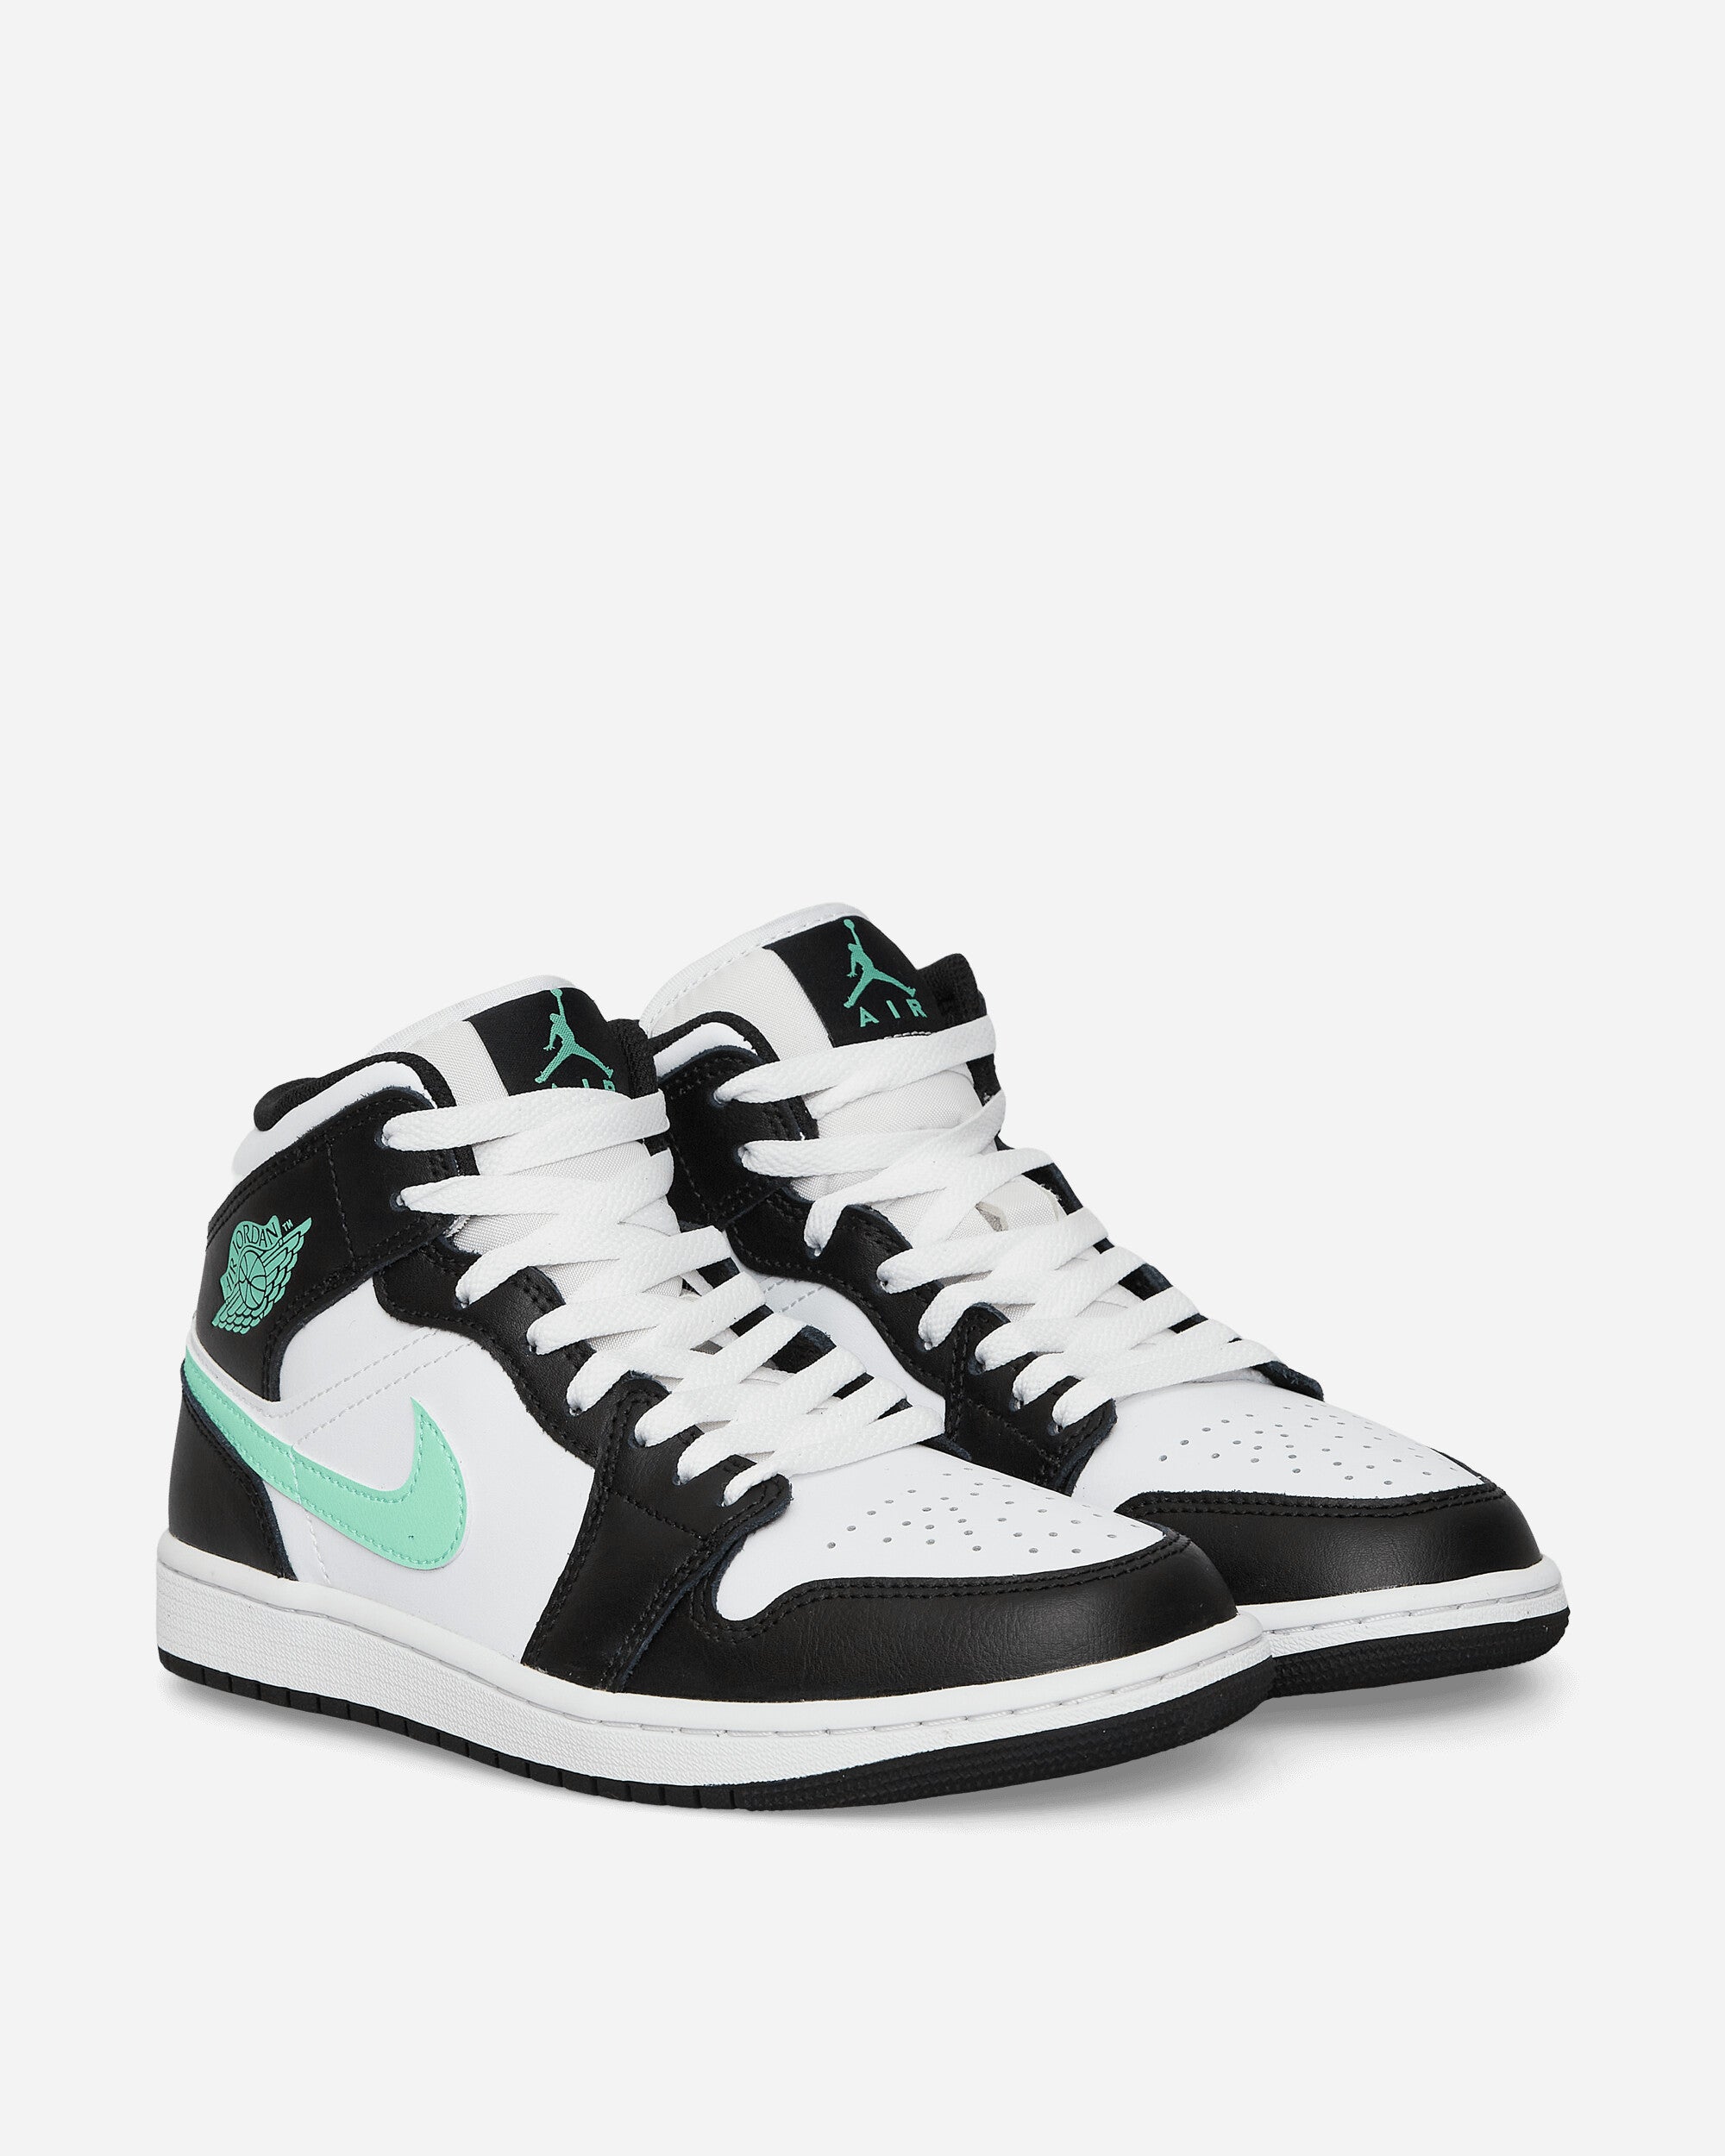 Air Jordan 1 Mid Sneakers White / Black / Green Glow